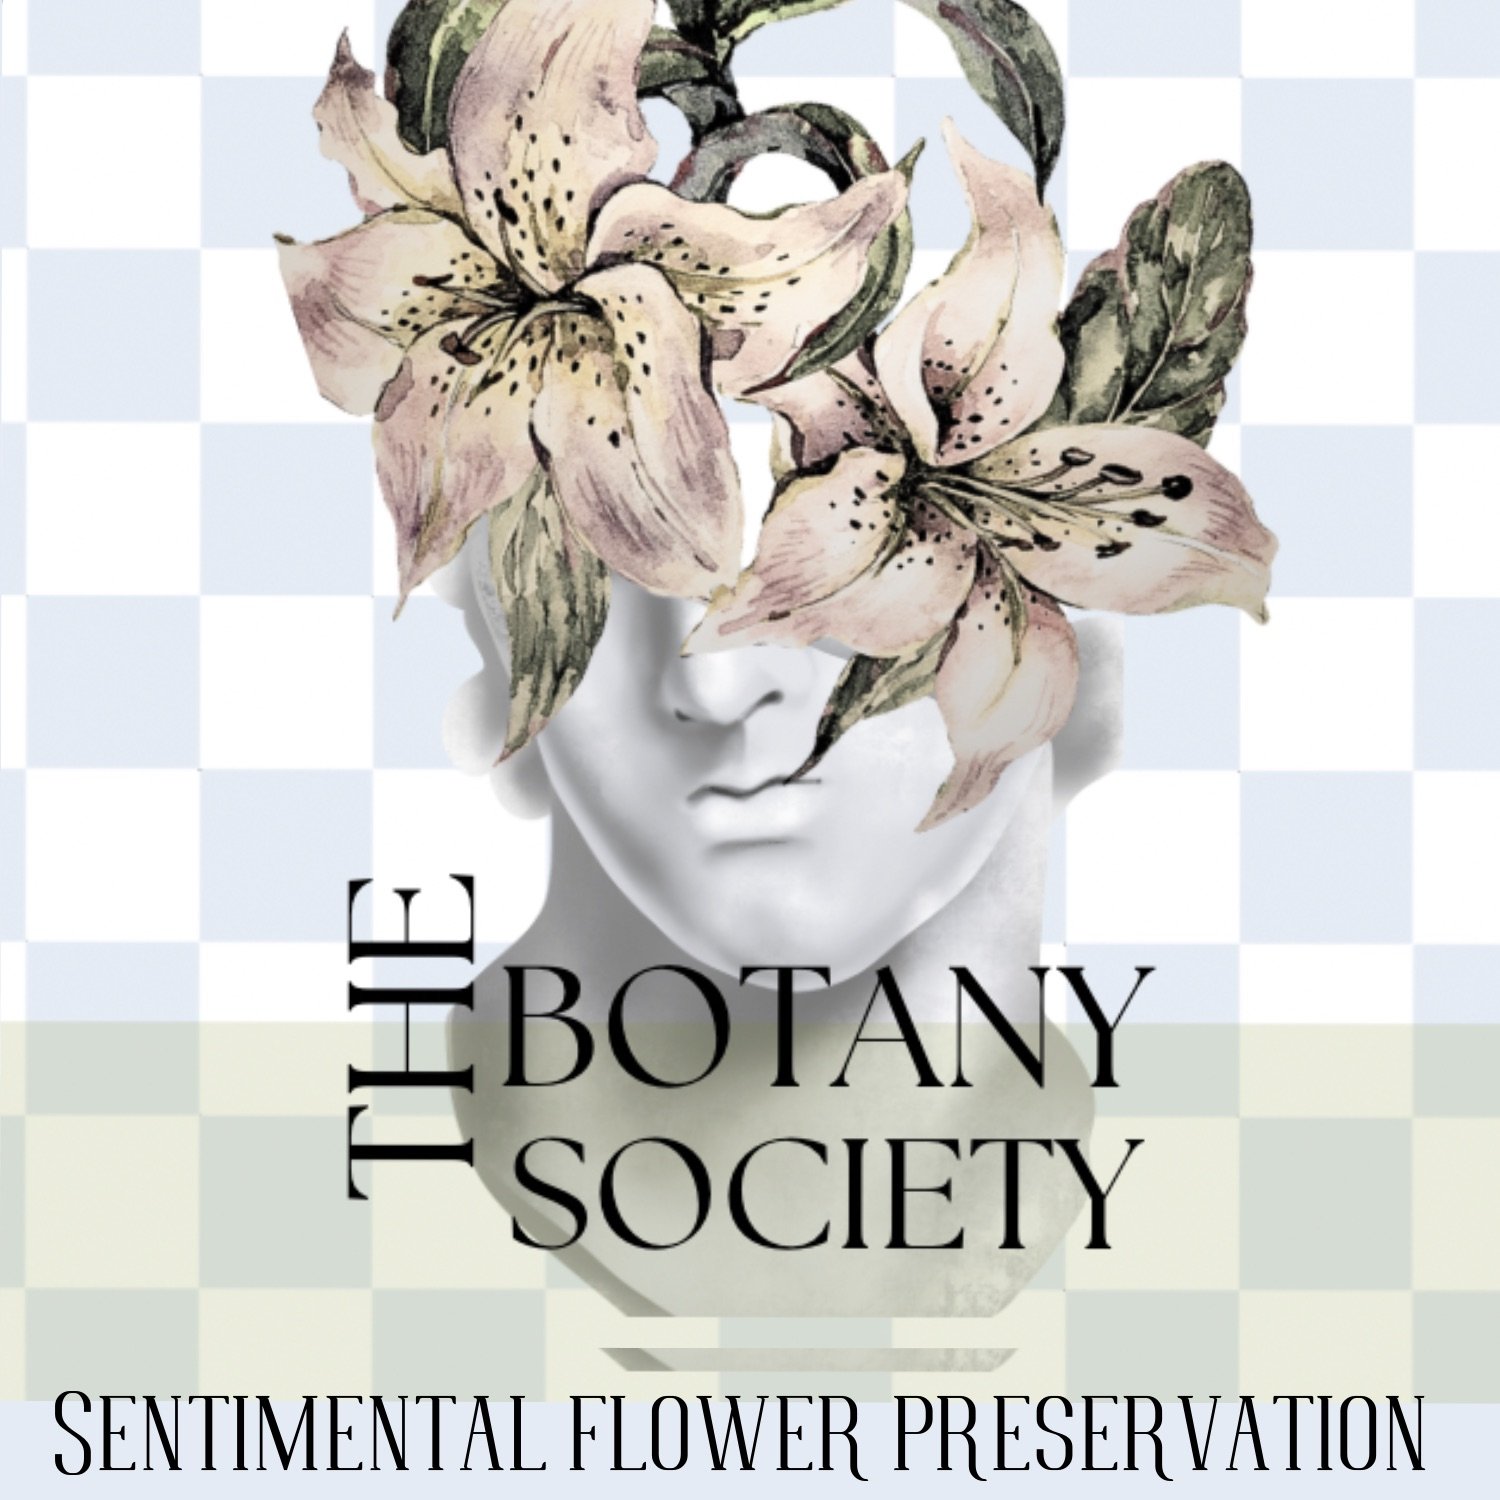 The Botany Society